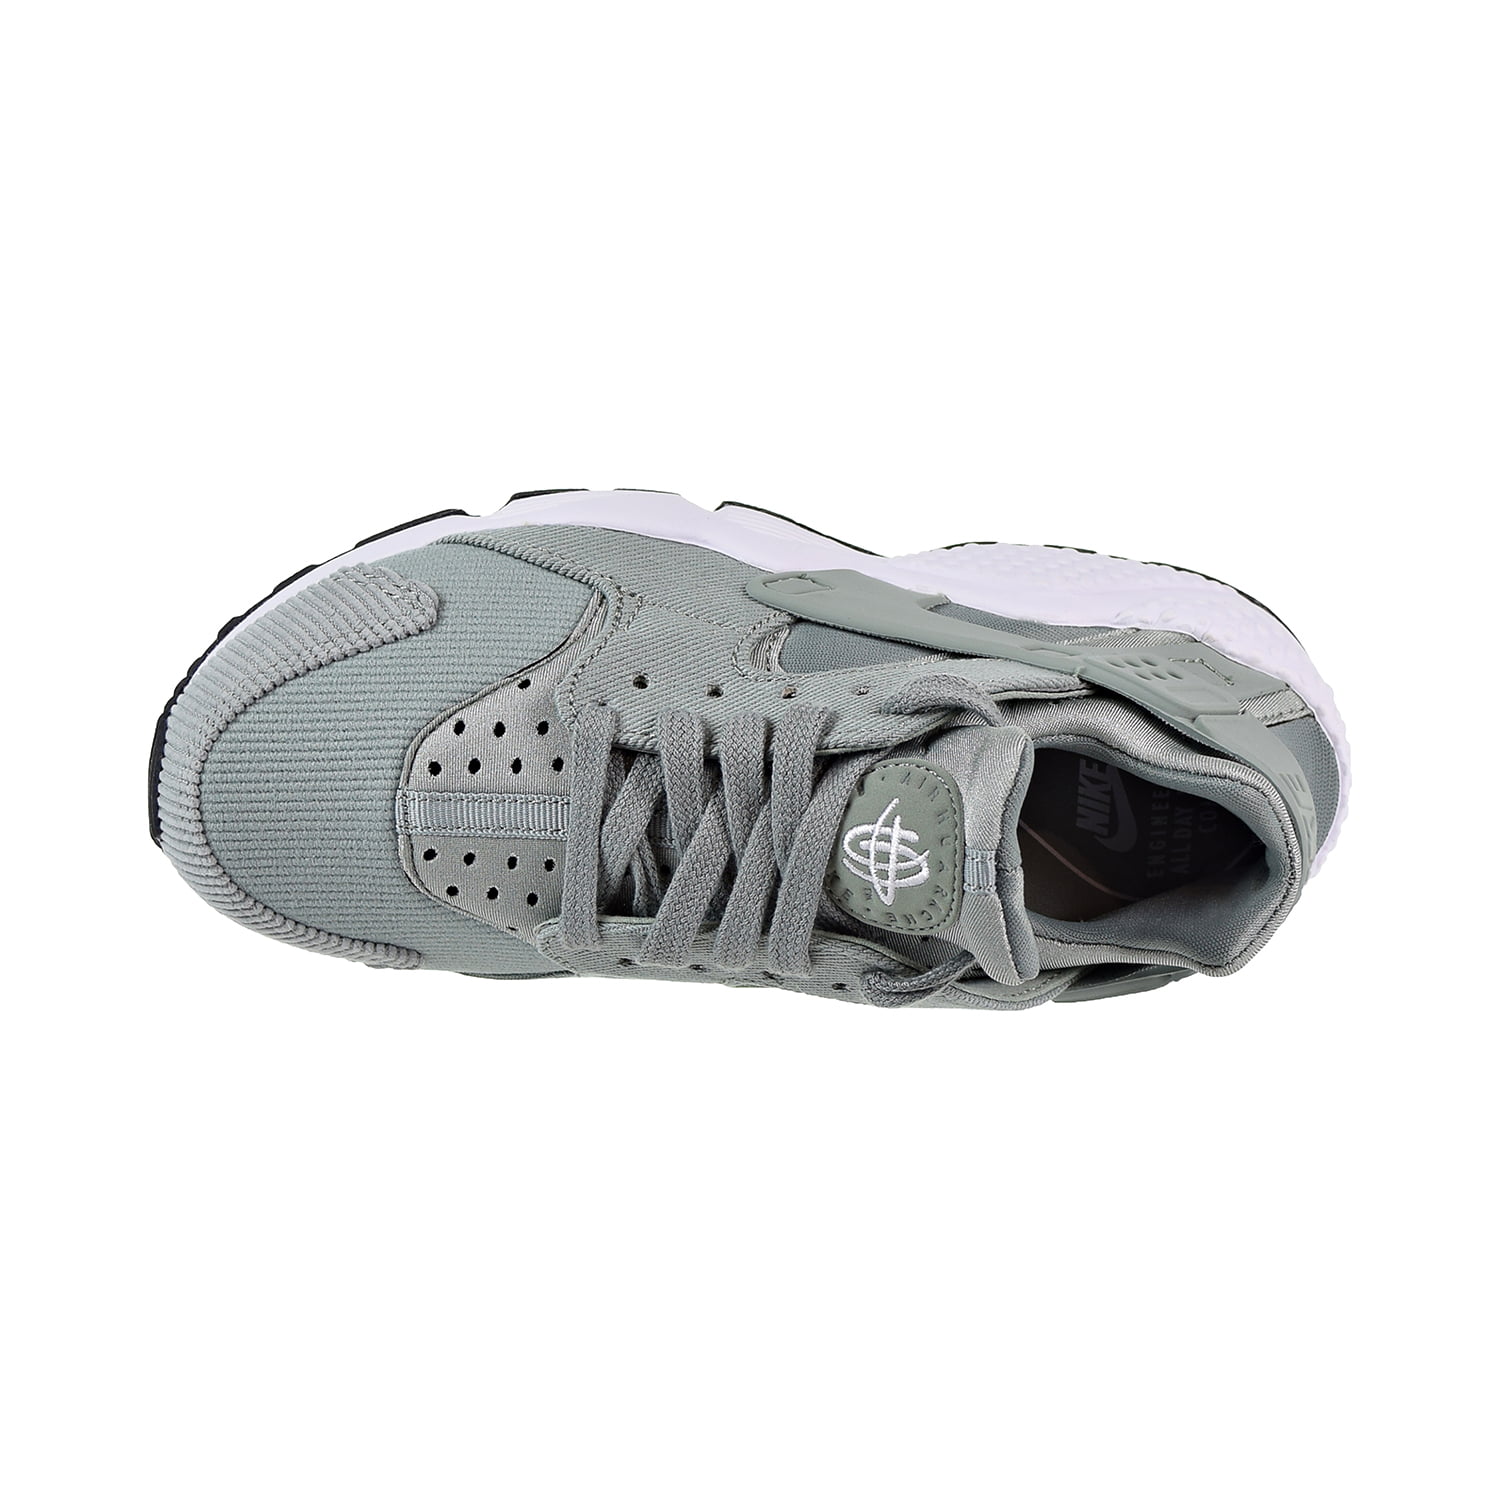 Nike Air Huarache Run SE Women's Shoes Mica Green/Black/White 859429-301